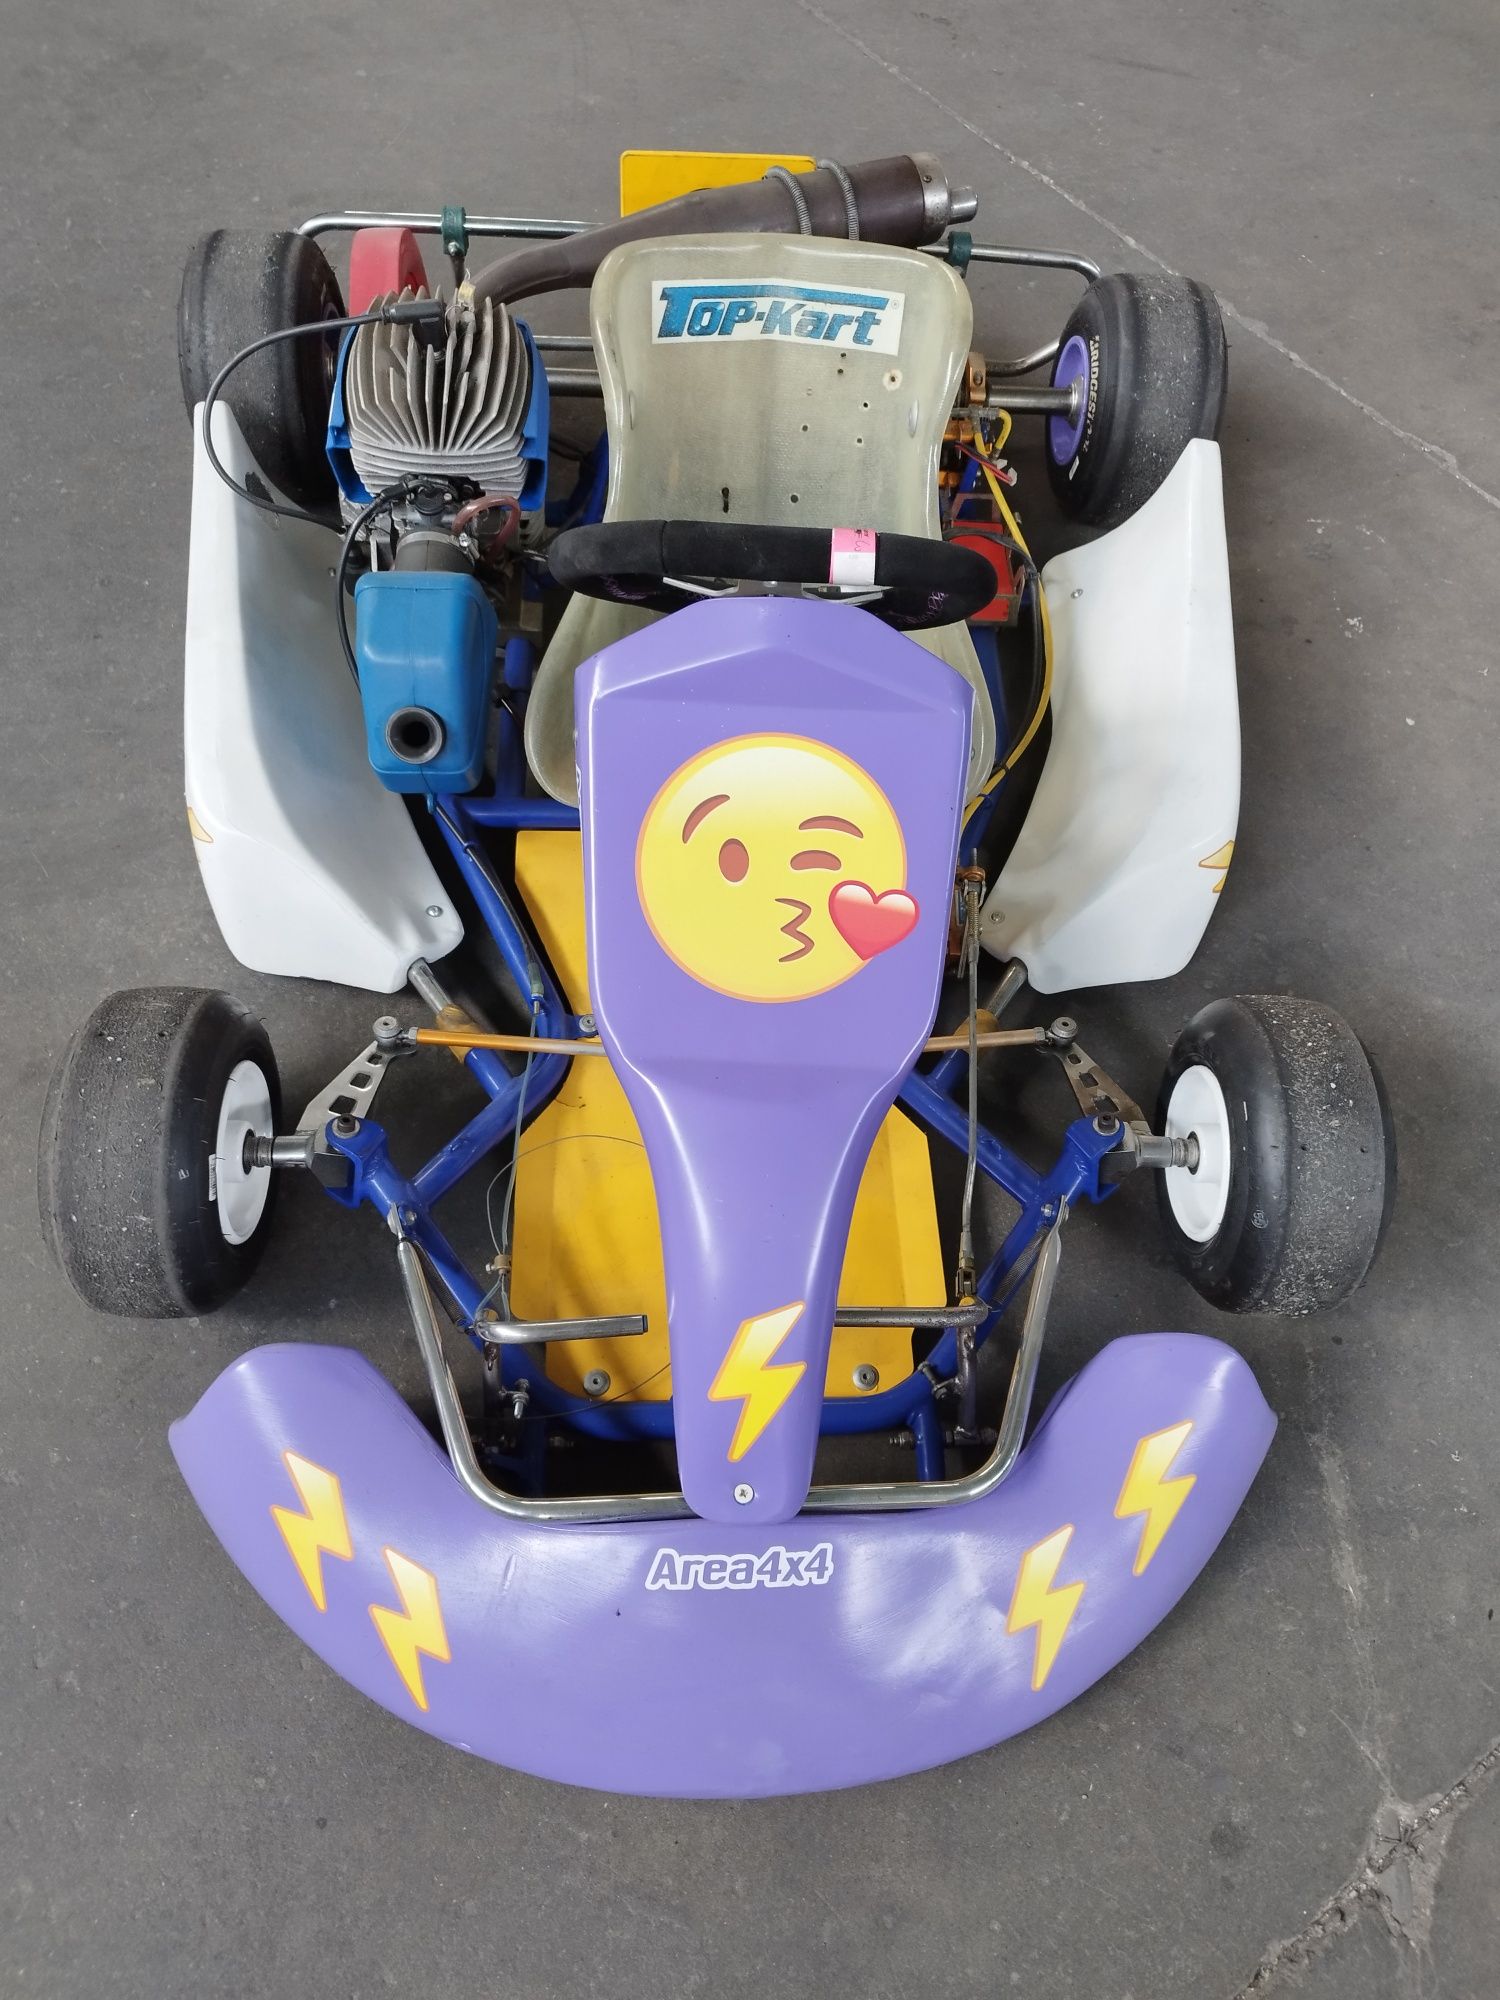 Kart Júnior Criança Top Kart